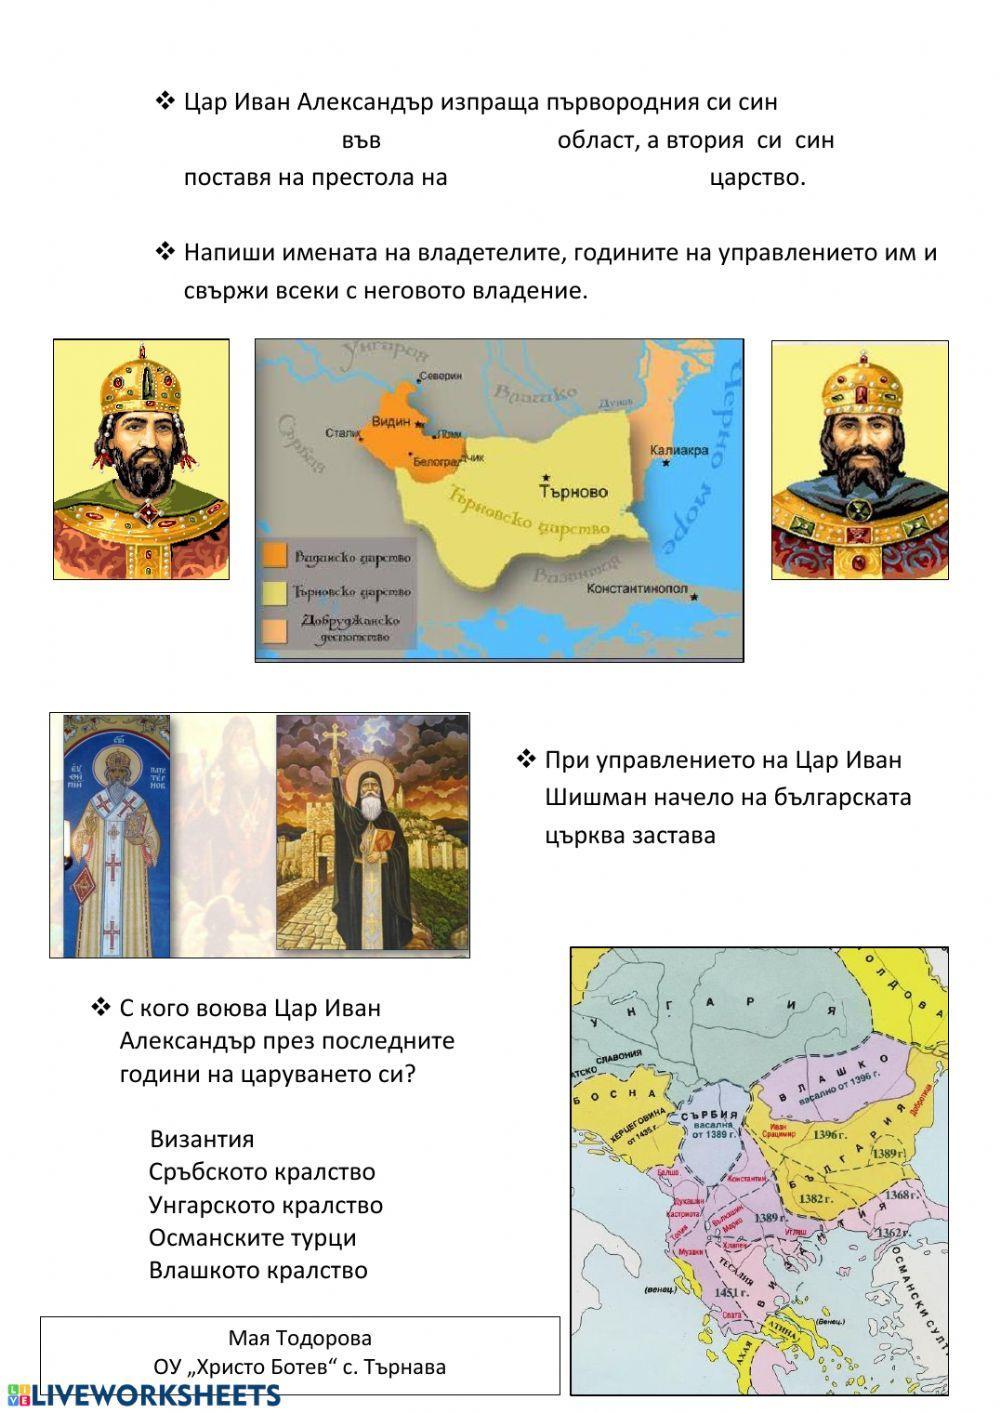 България при цар Иван Александър